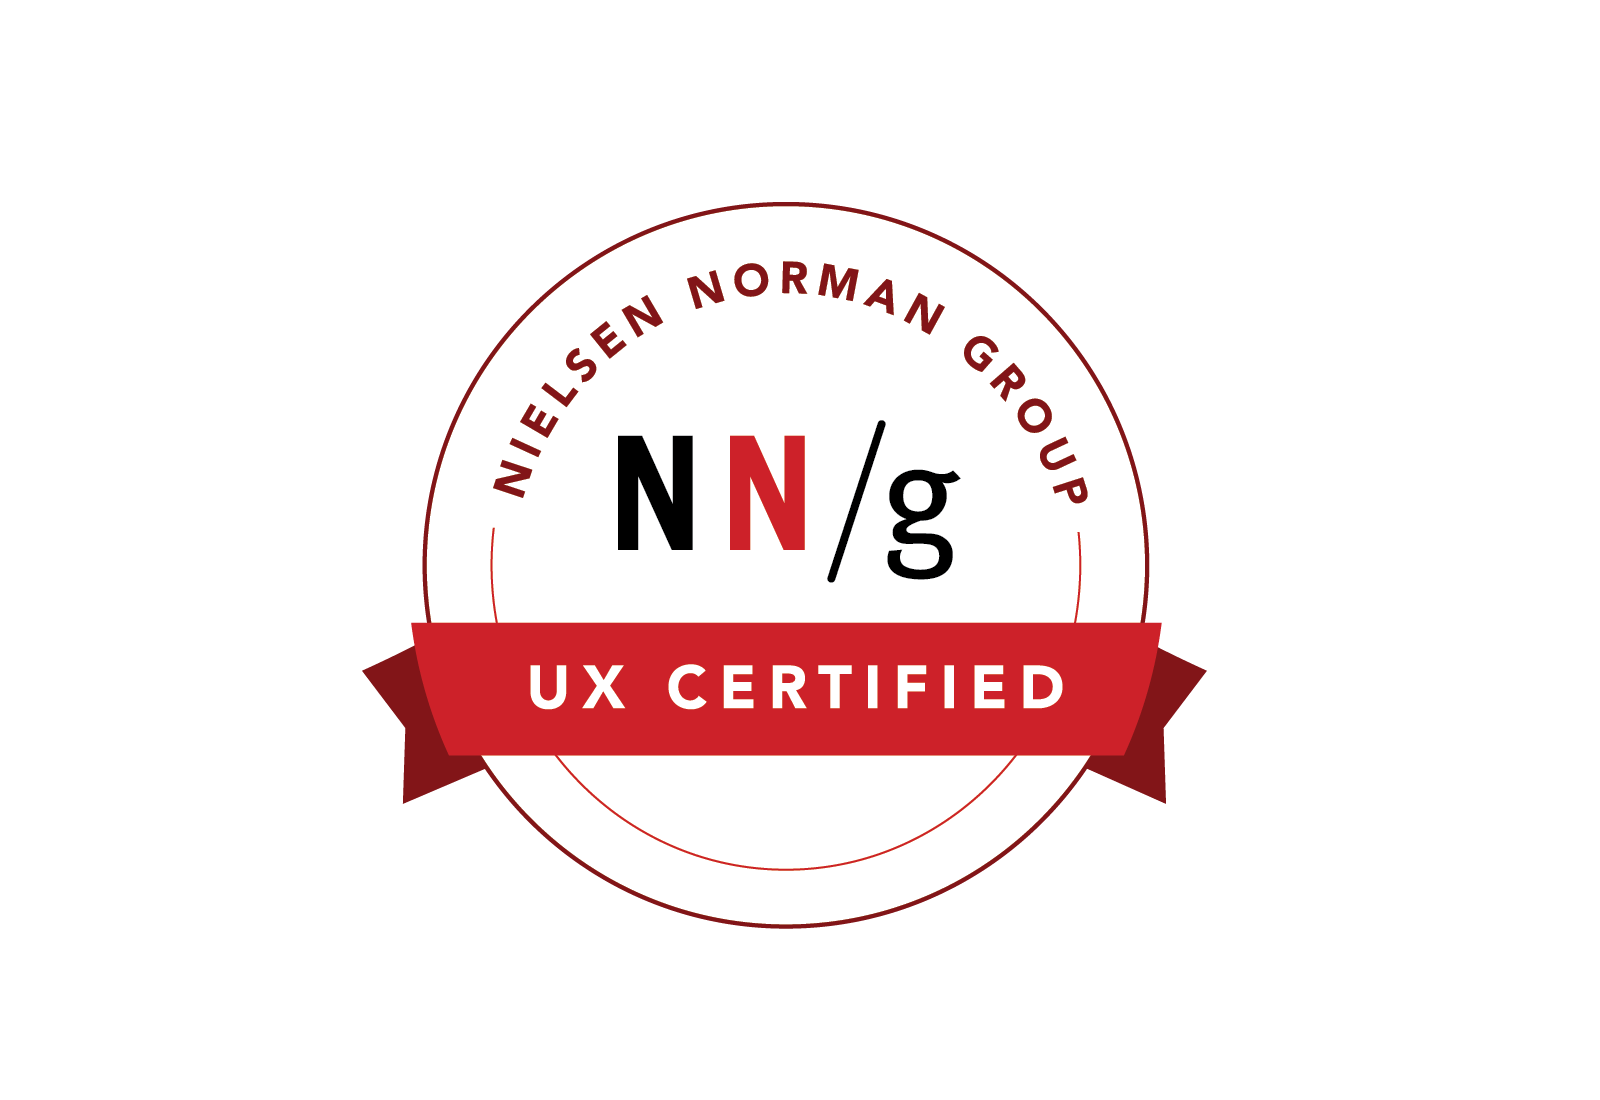 NN/g ux certified